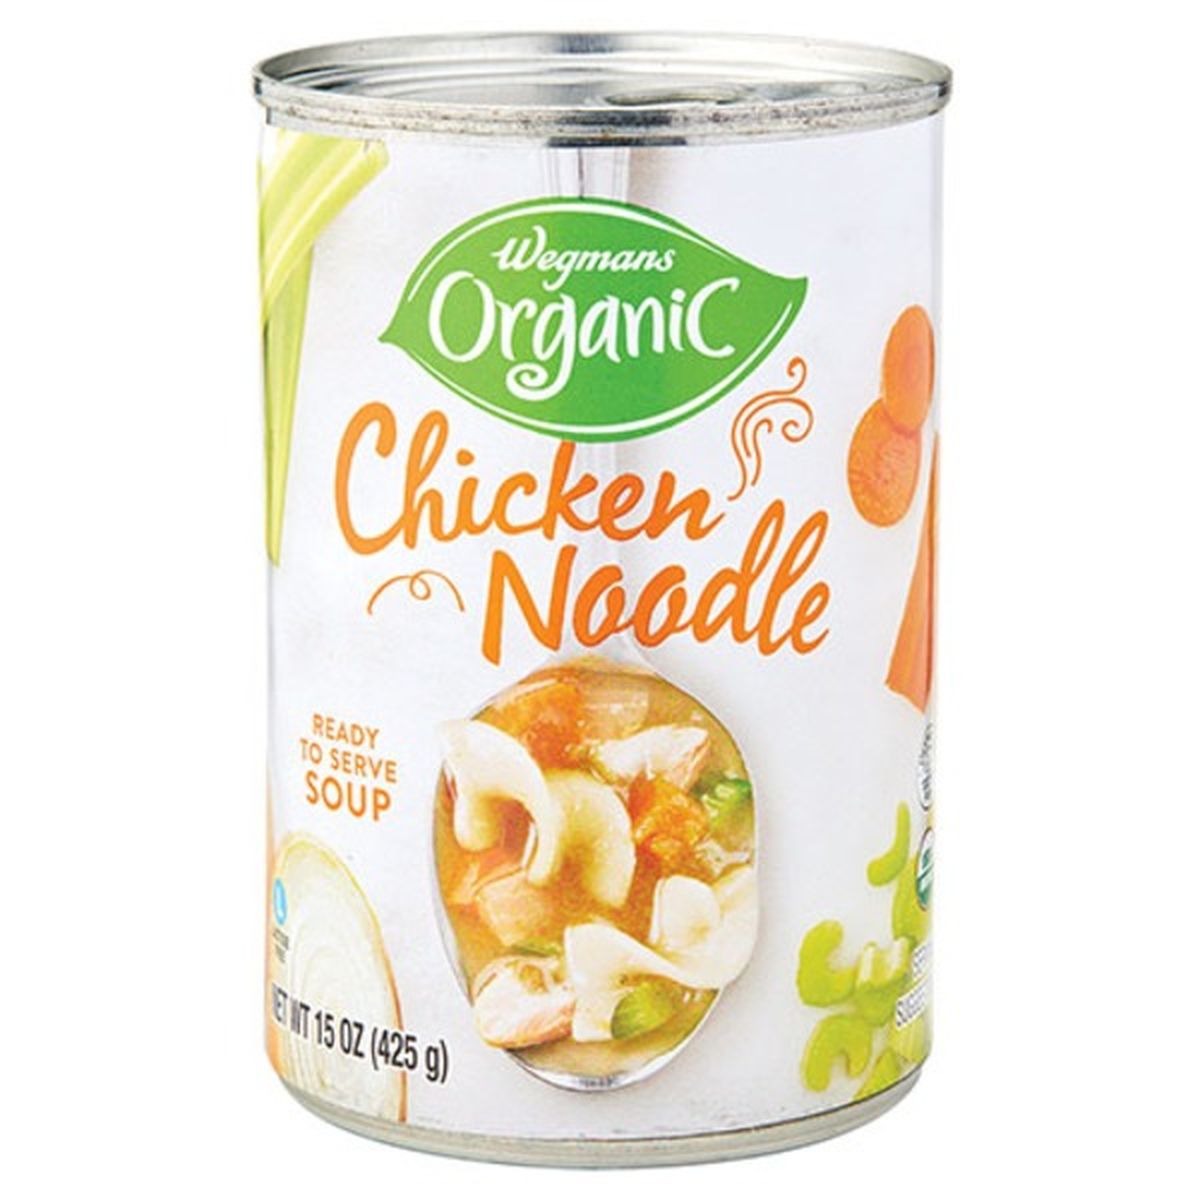 Calories in Wegmans Organic Chicken Noodle Soup